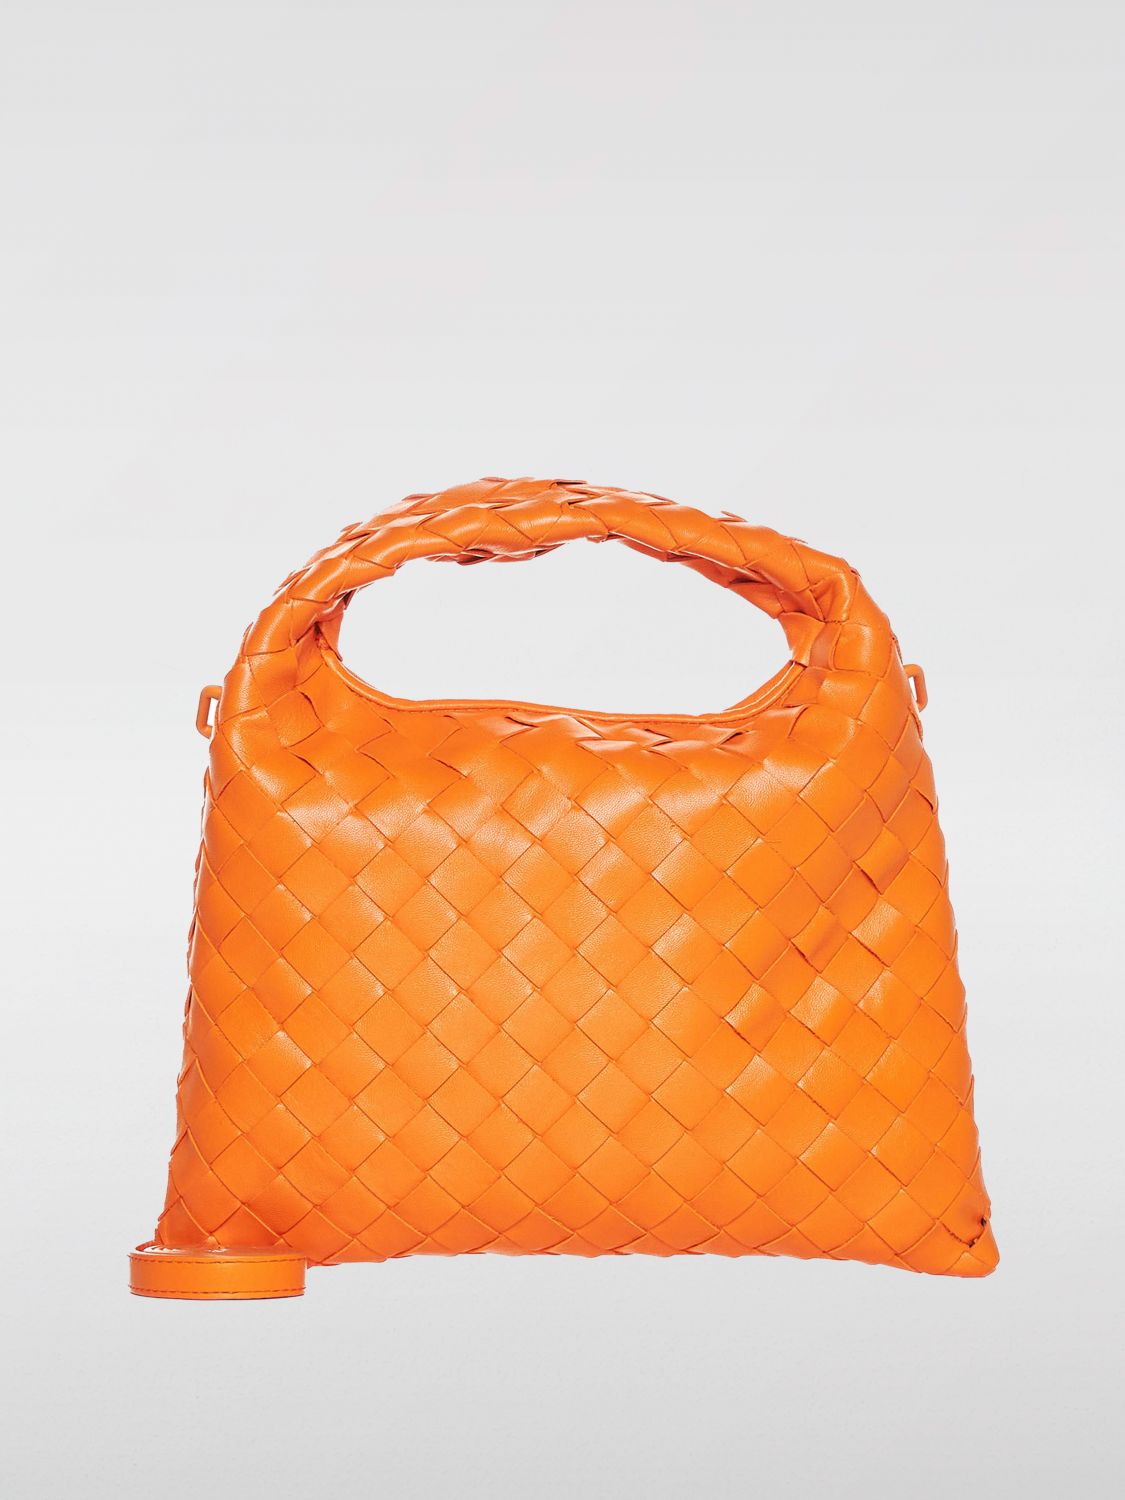 Bottega Veneta Hop Bag In Woven Leather In Orange